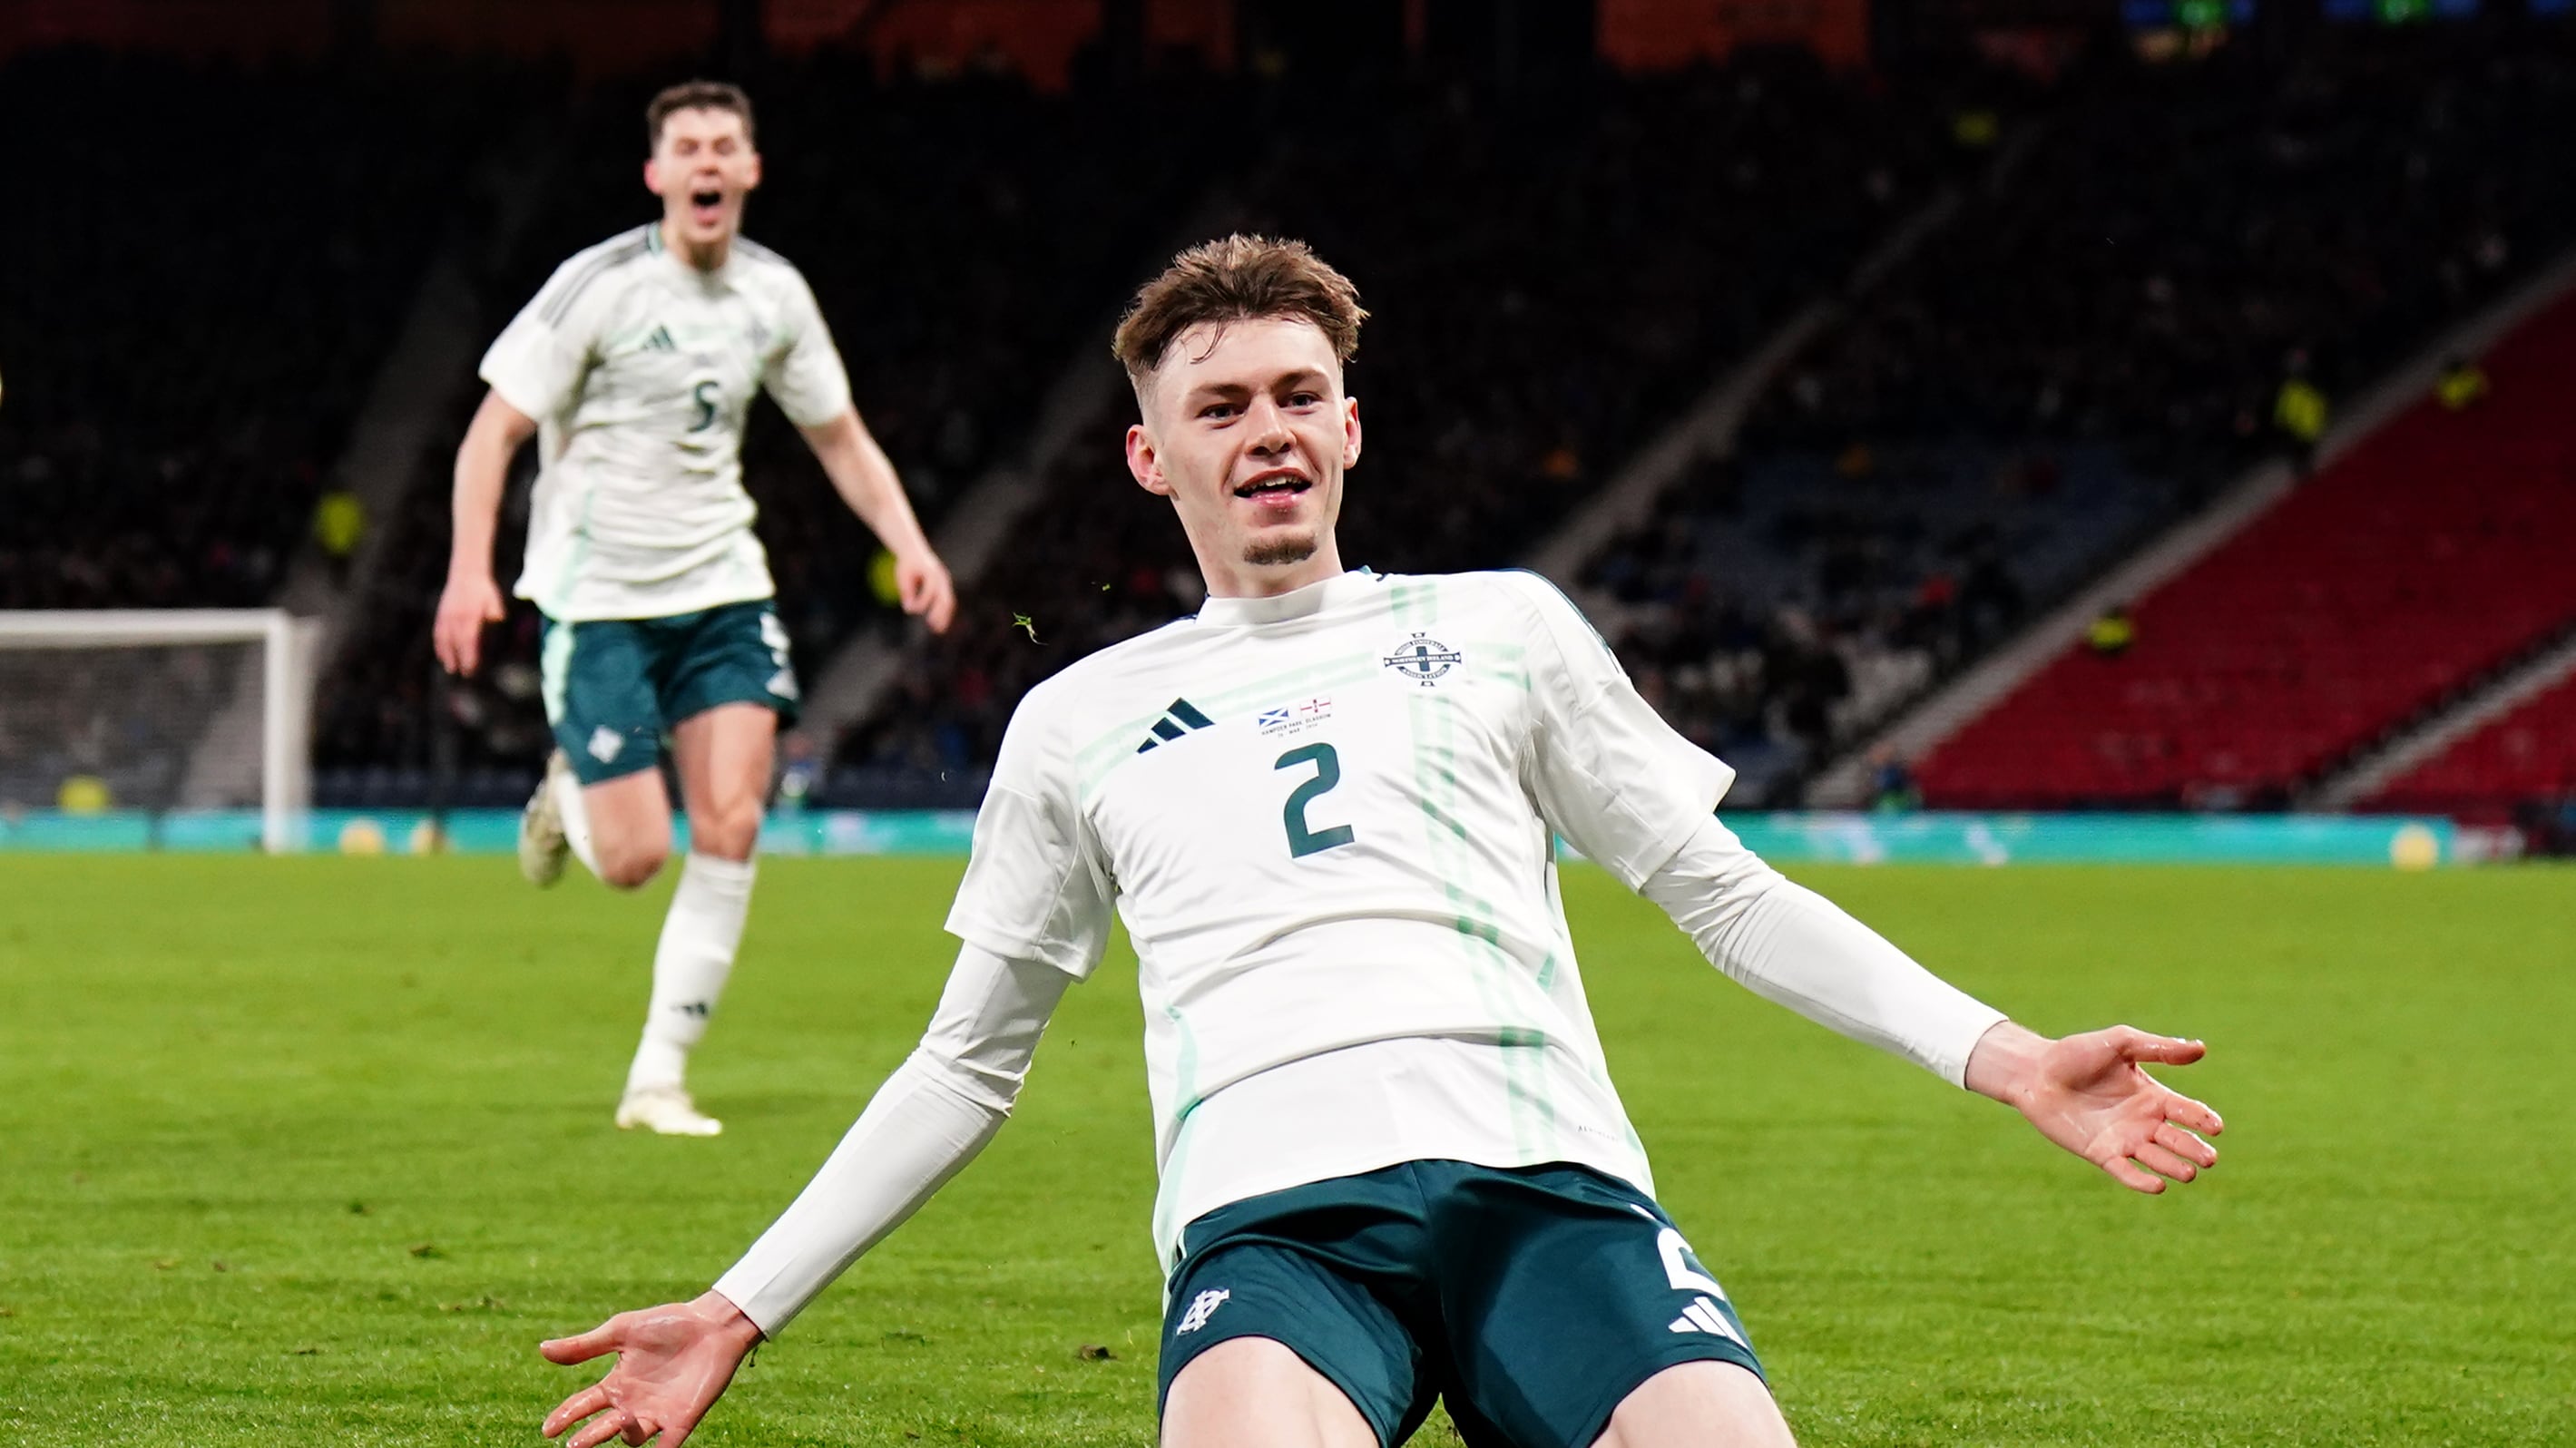 Conor Bradley scored both goals in Northern Ireland’s win